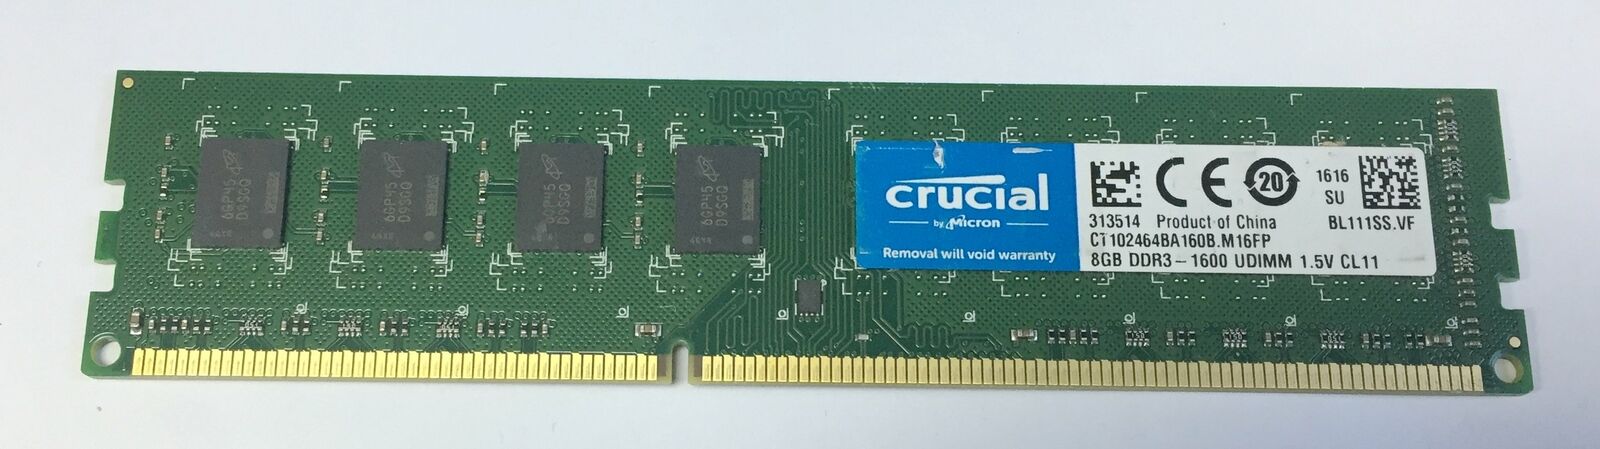 CRUCIAL 8GB x1 DDR3L-1600HMZ CT102464BD160B.M16FP UDIMM Desktop 1.35V RAM 240pin